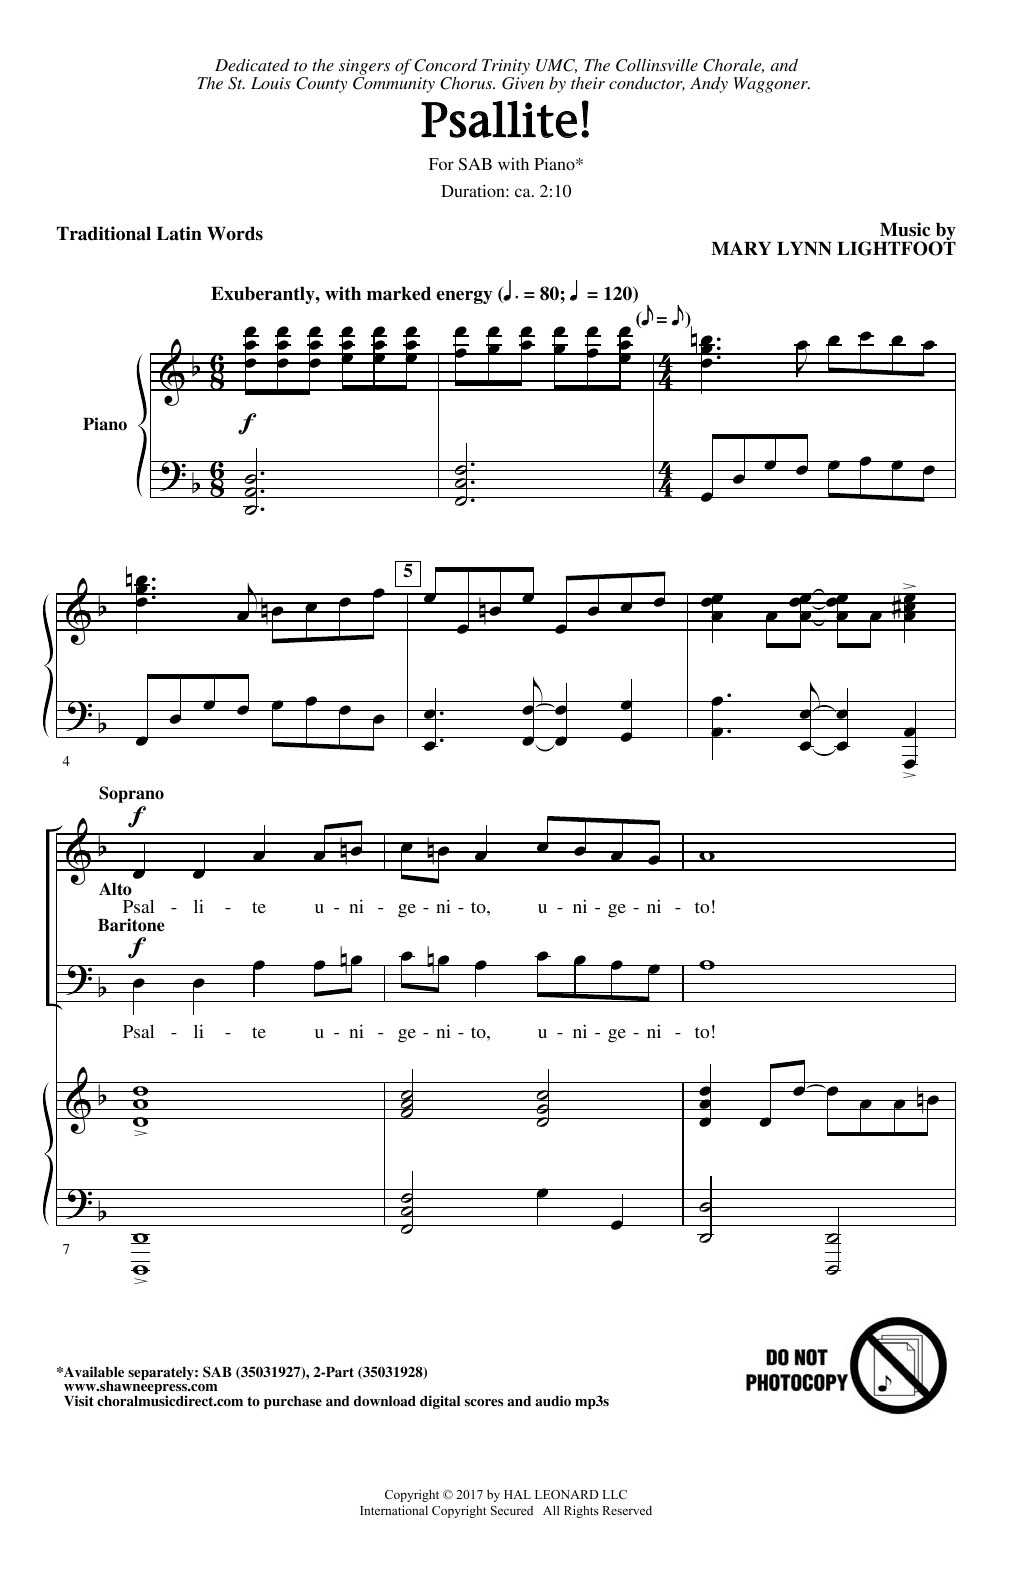 Mary Lynn Lightfoot Psallite! Sheet Music Notes & Chords for SAB - Download or Print PDF